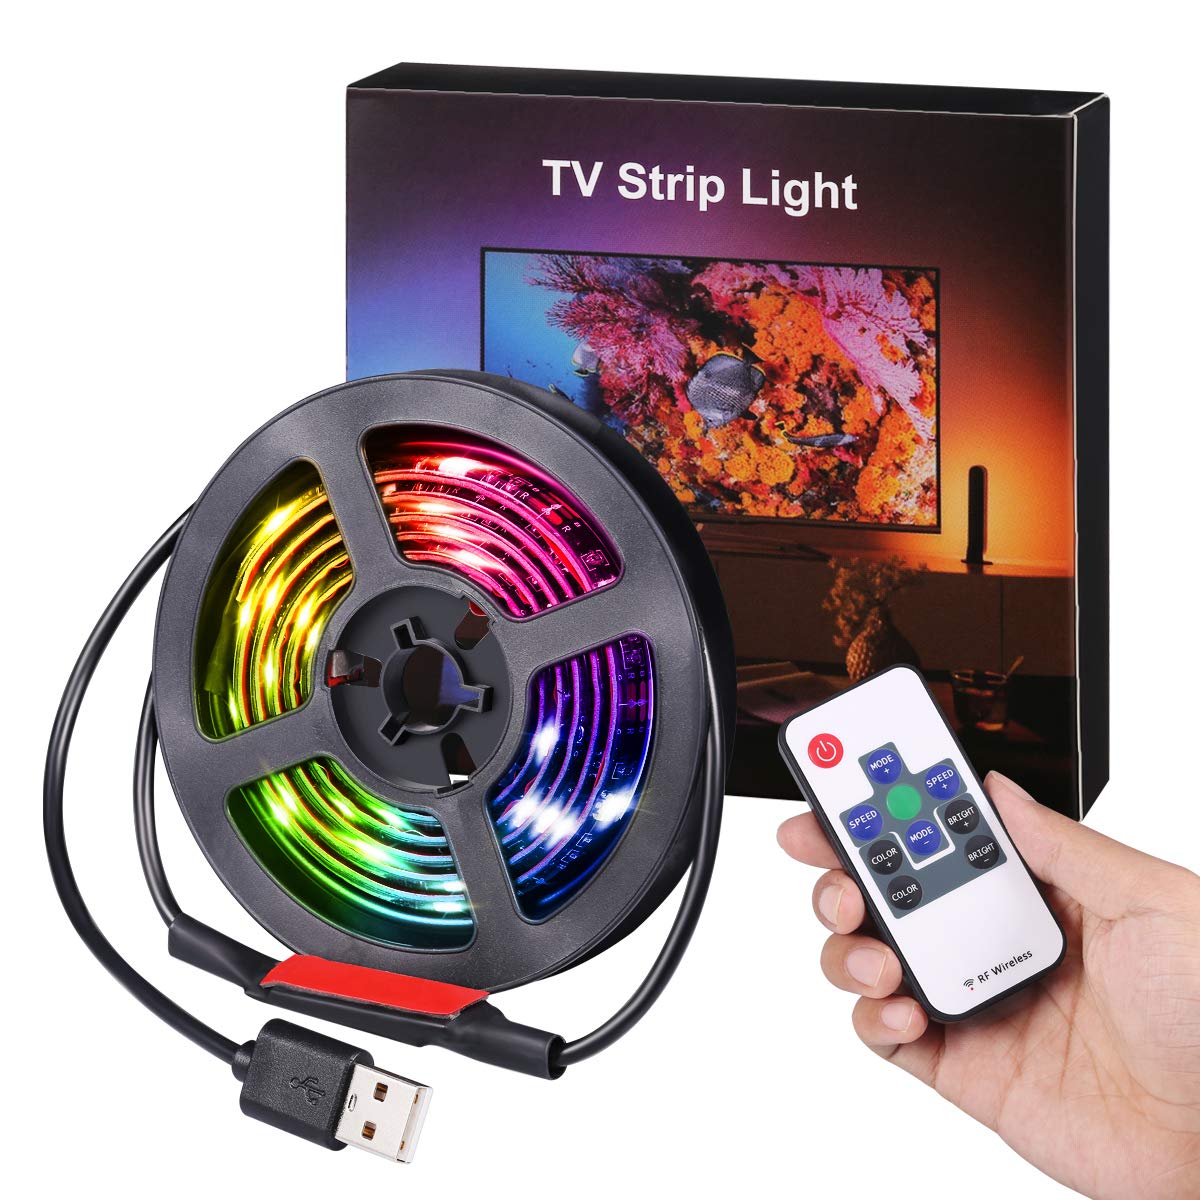 TV backlight strip ambilight | Ambilight TV USB LED Strip light 5050 RGB Dream color ws2812b strip for TV Desktop PC Screen Backlight lighting